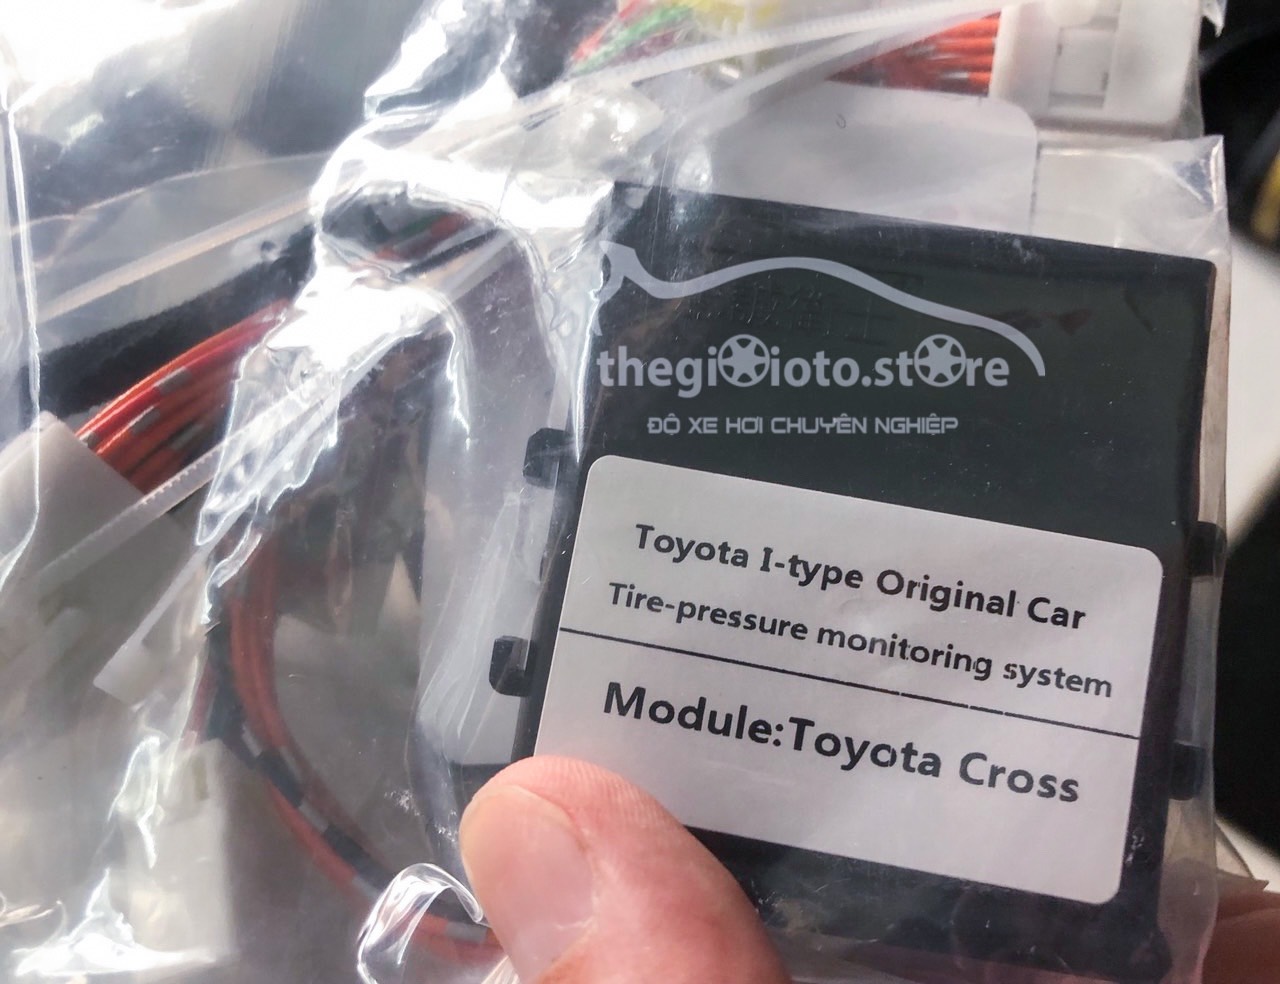 Module kích hoạt cảm biến lốp Toyota Cross